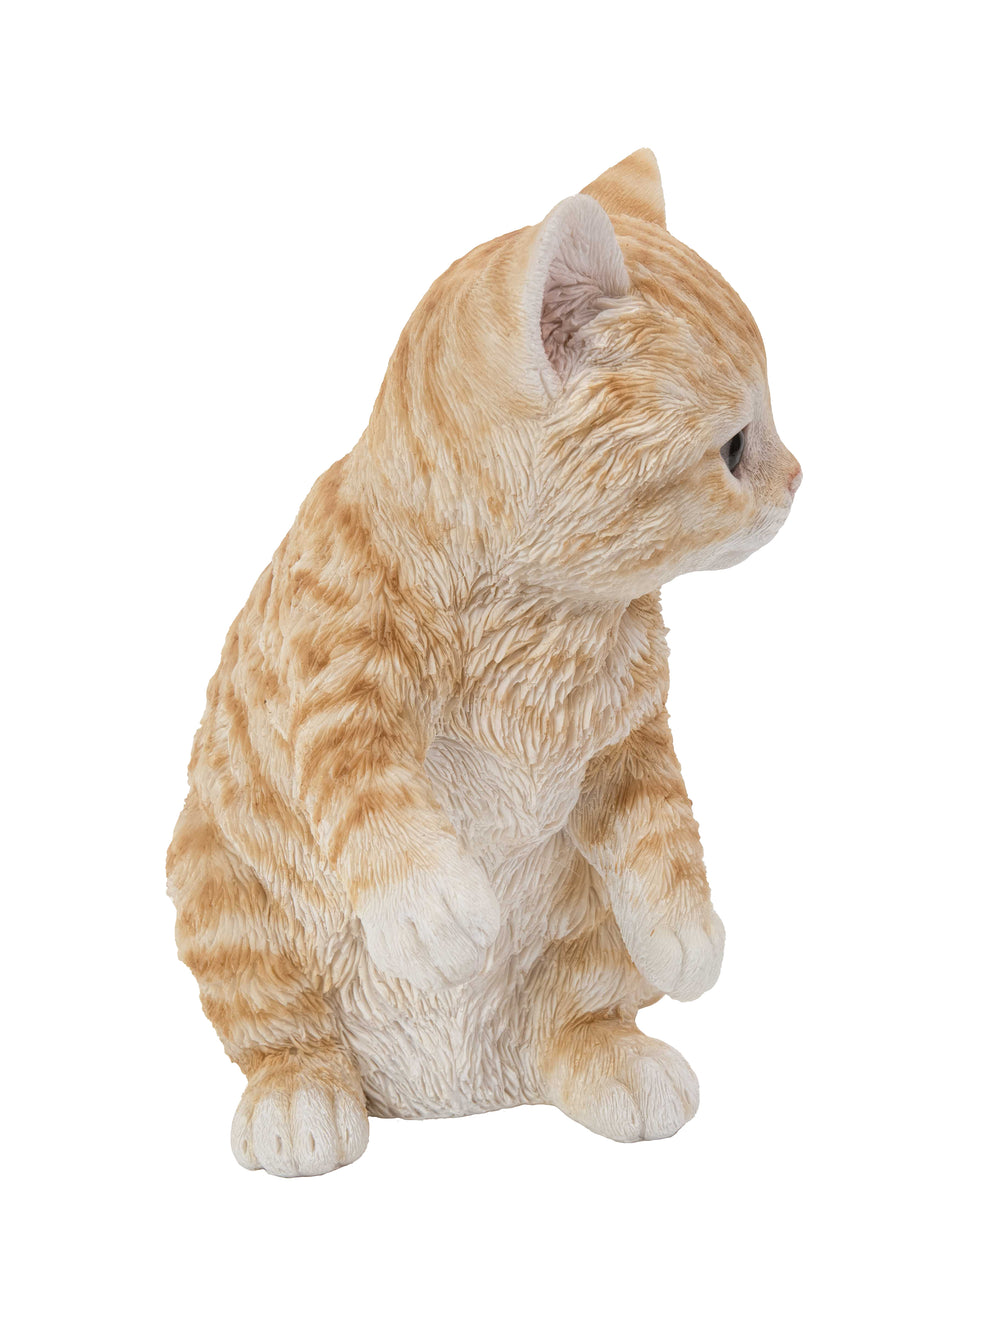 Playing Orange Tabby Kitten Statue Hi-Line Gift Ltd.